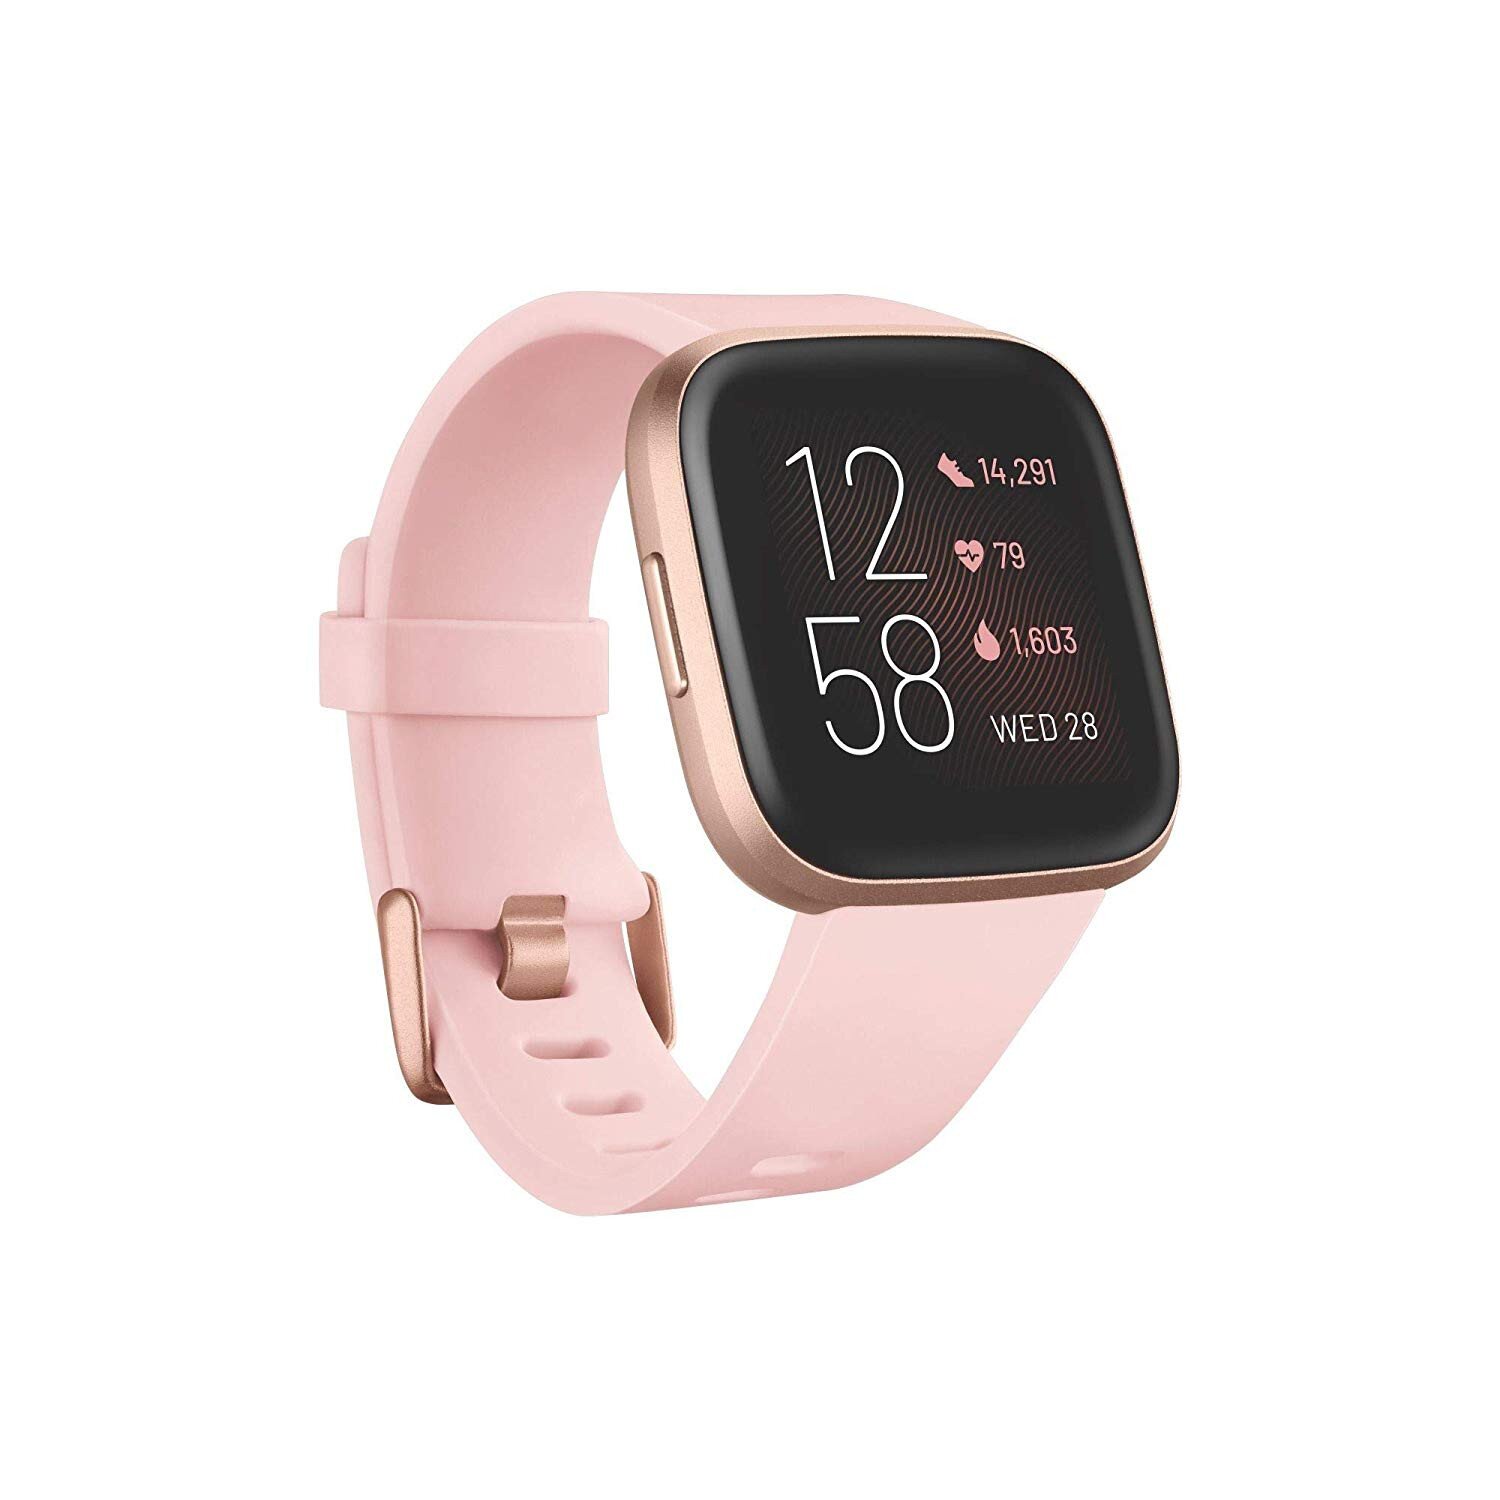 Fitbit Versa 2 Health and Fitness Smartwatch - Petal / Copper Rose Aluminum